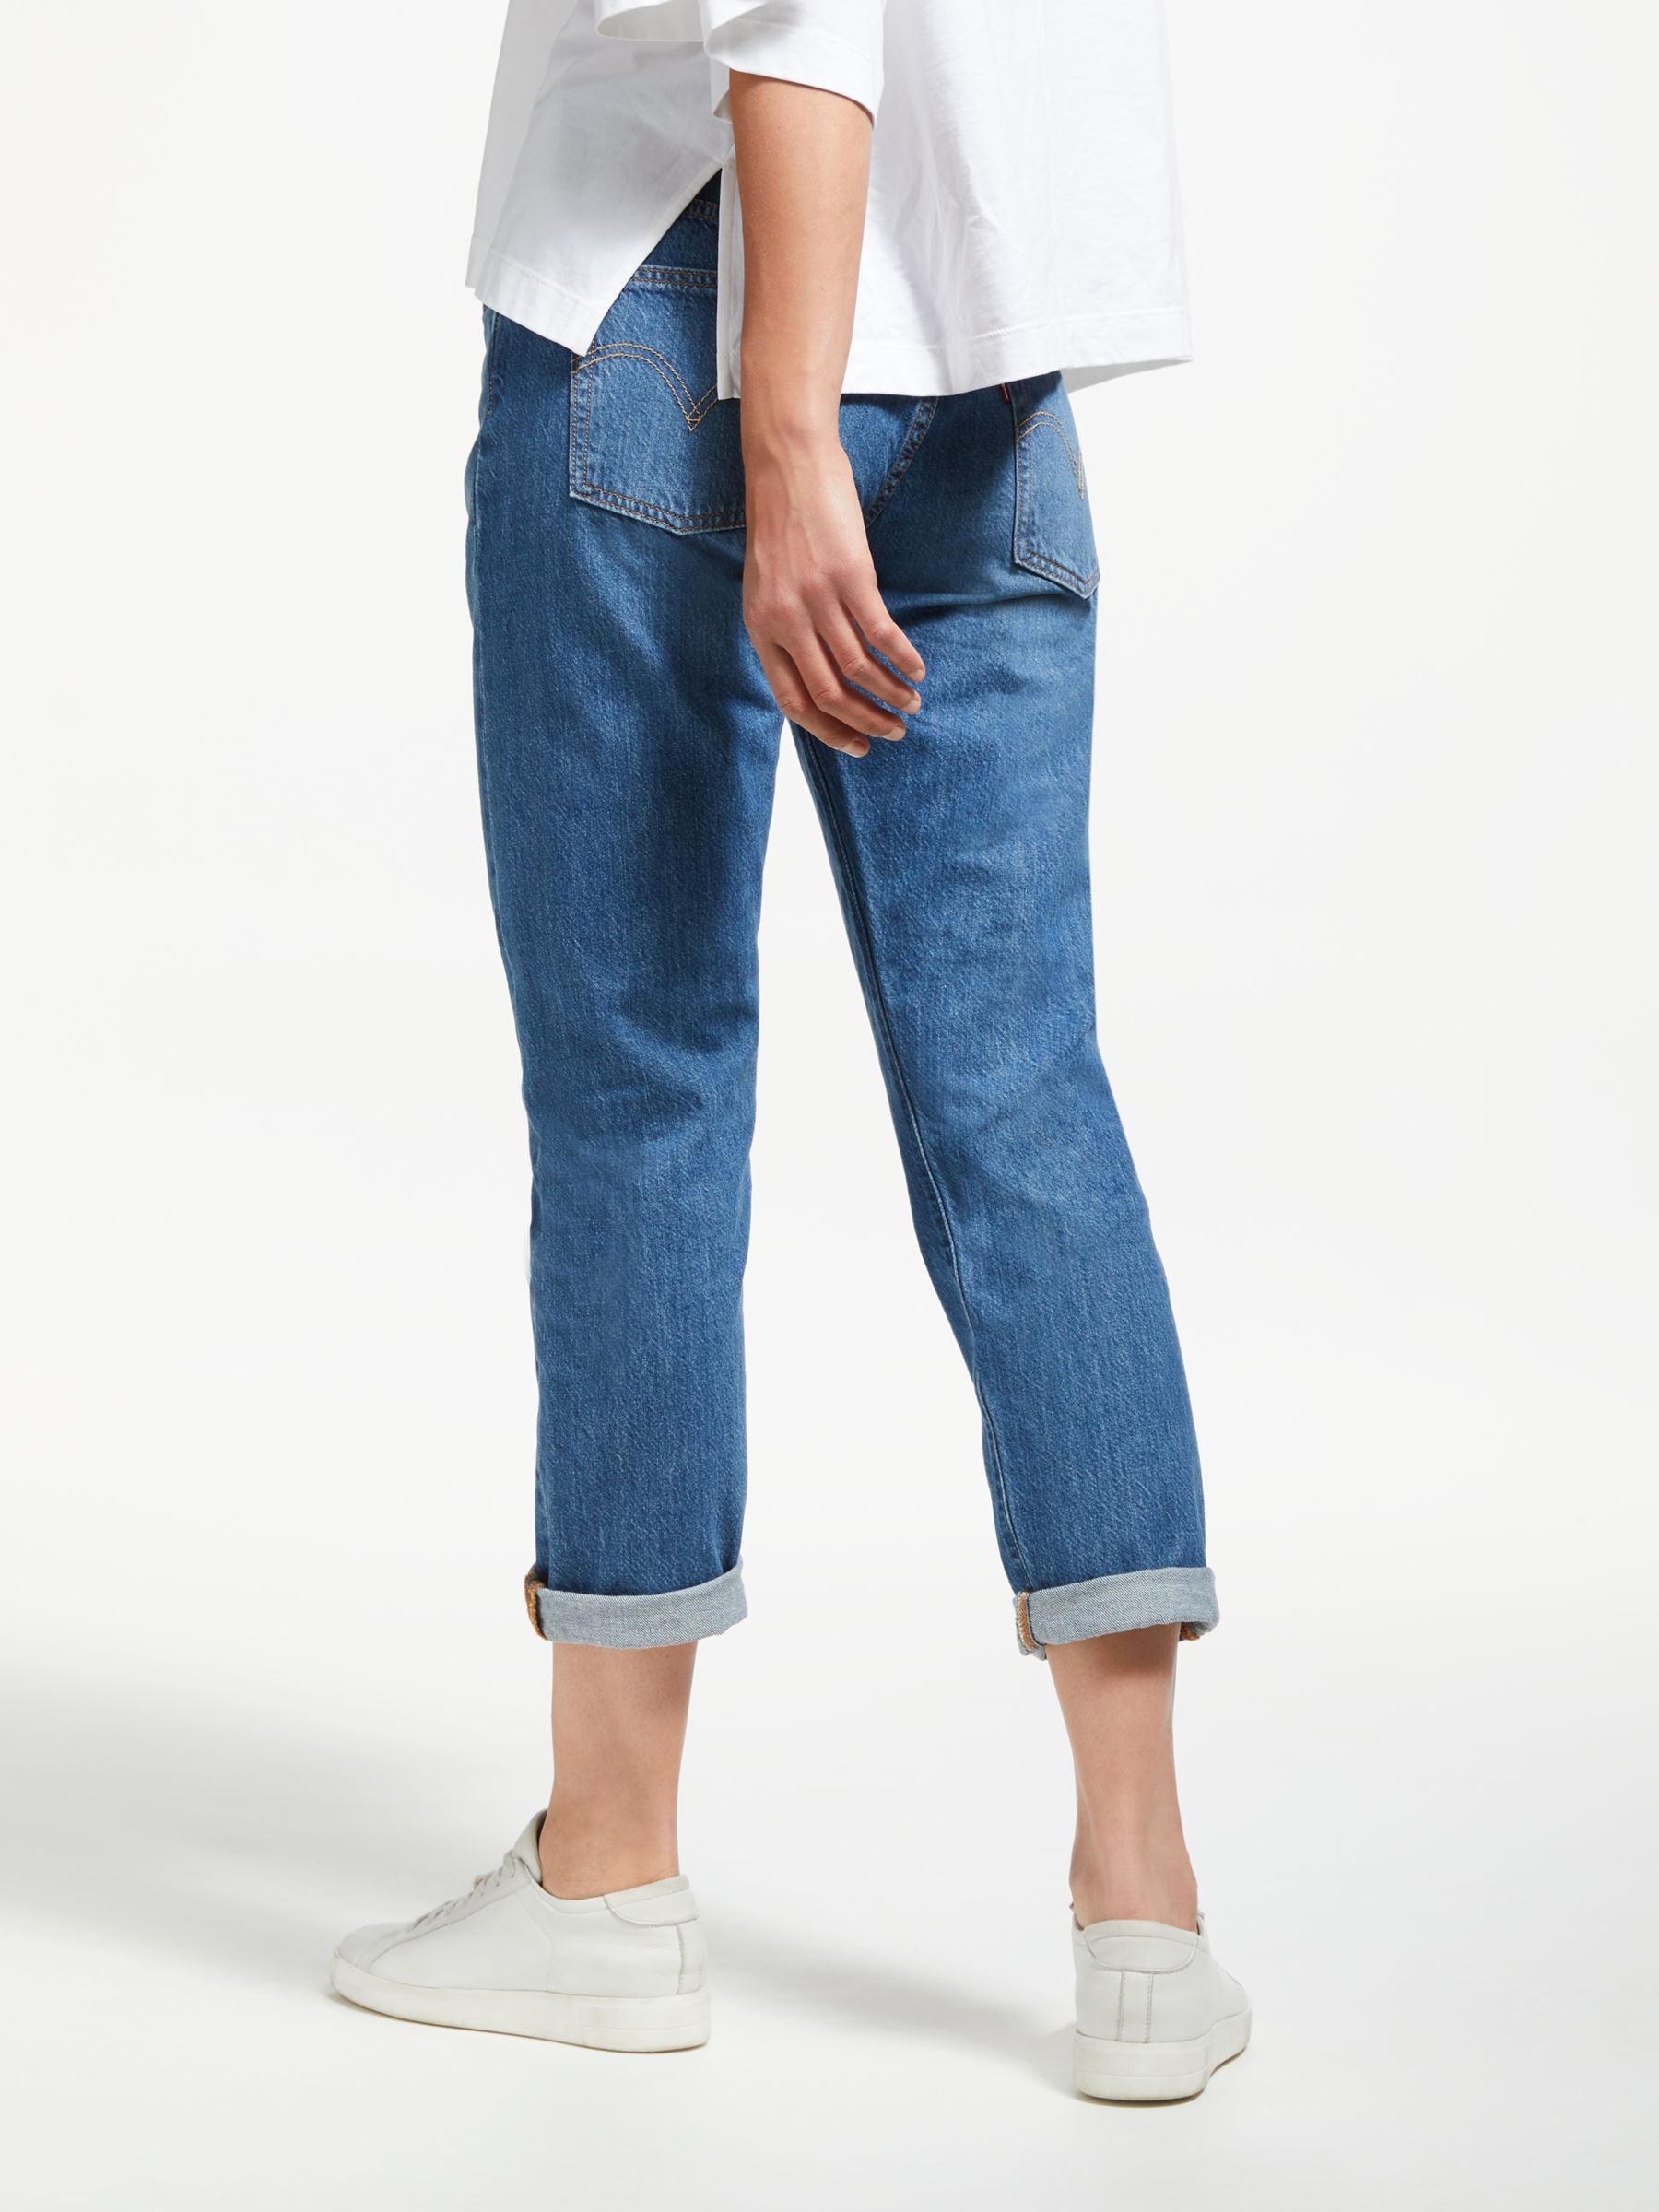 Levi's 501 Taper Jeans